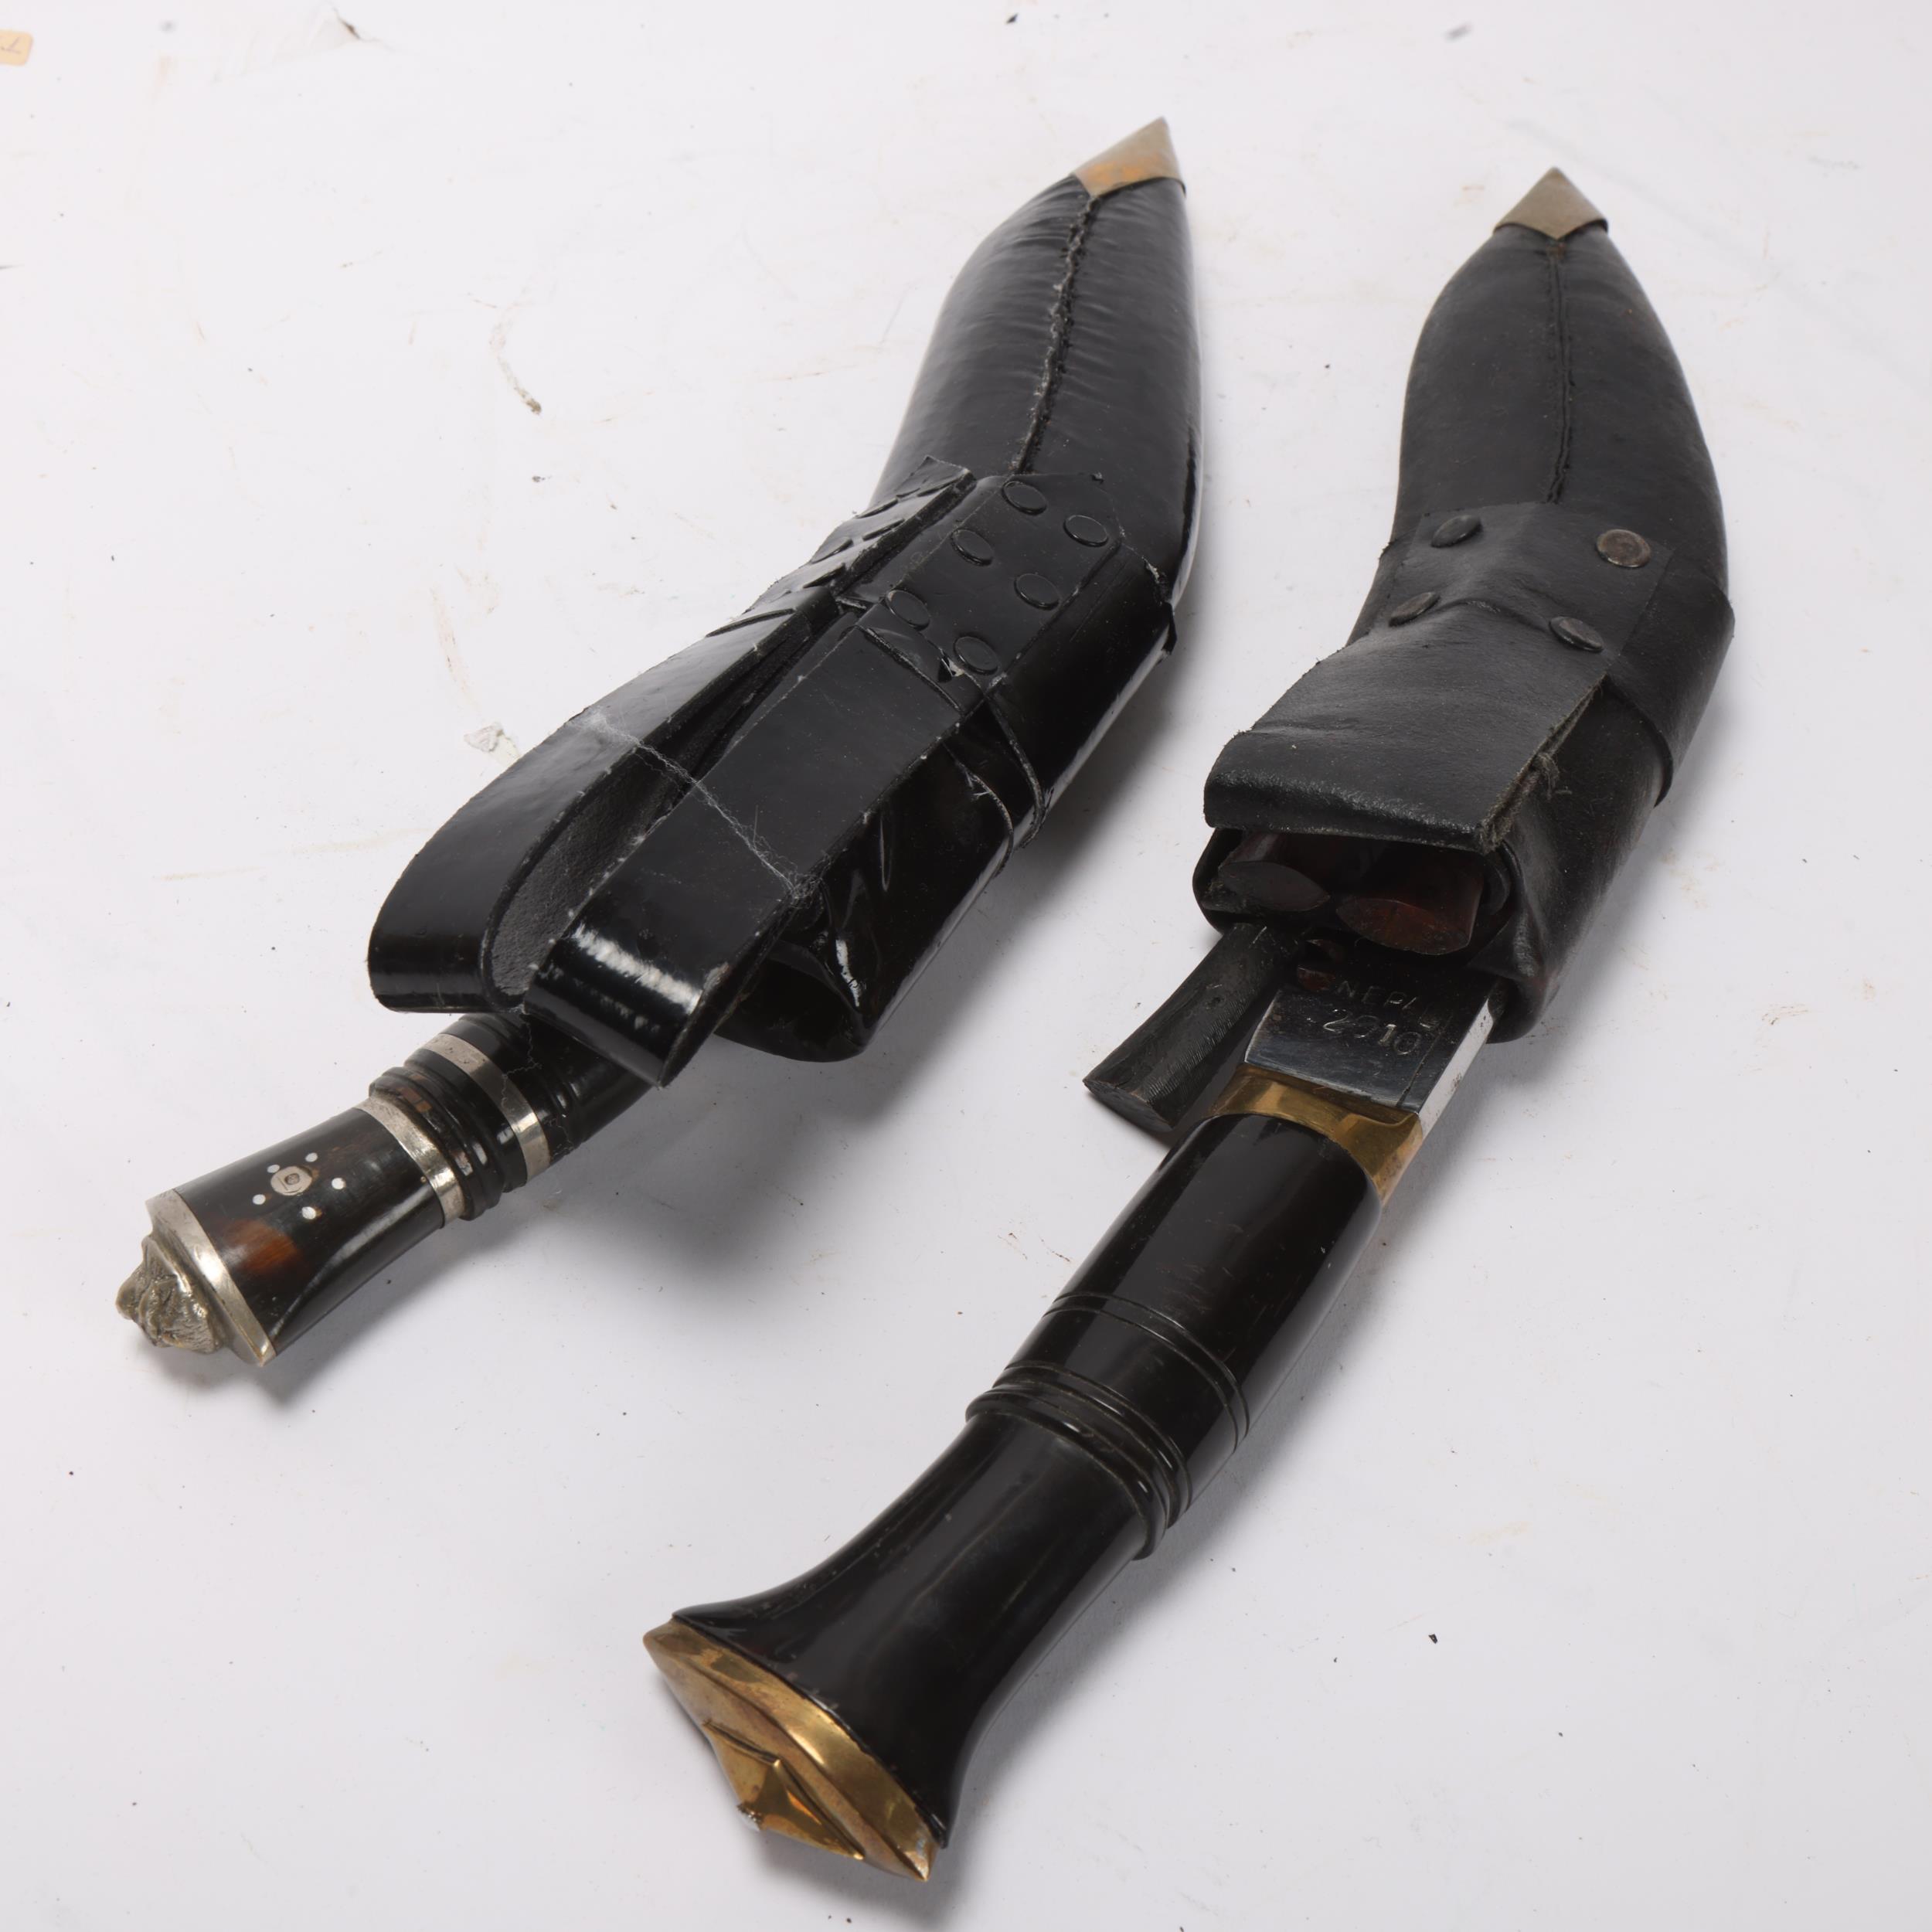 2 Gurkha kukri knives with leather scabbards - Image 3 of 3